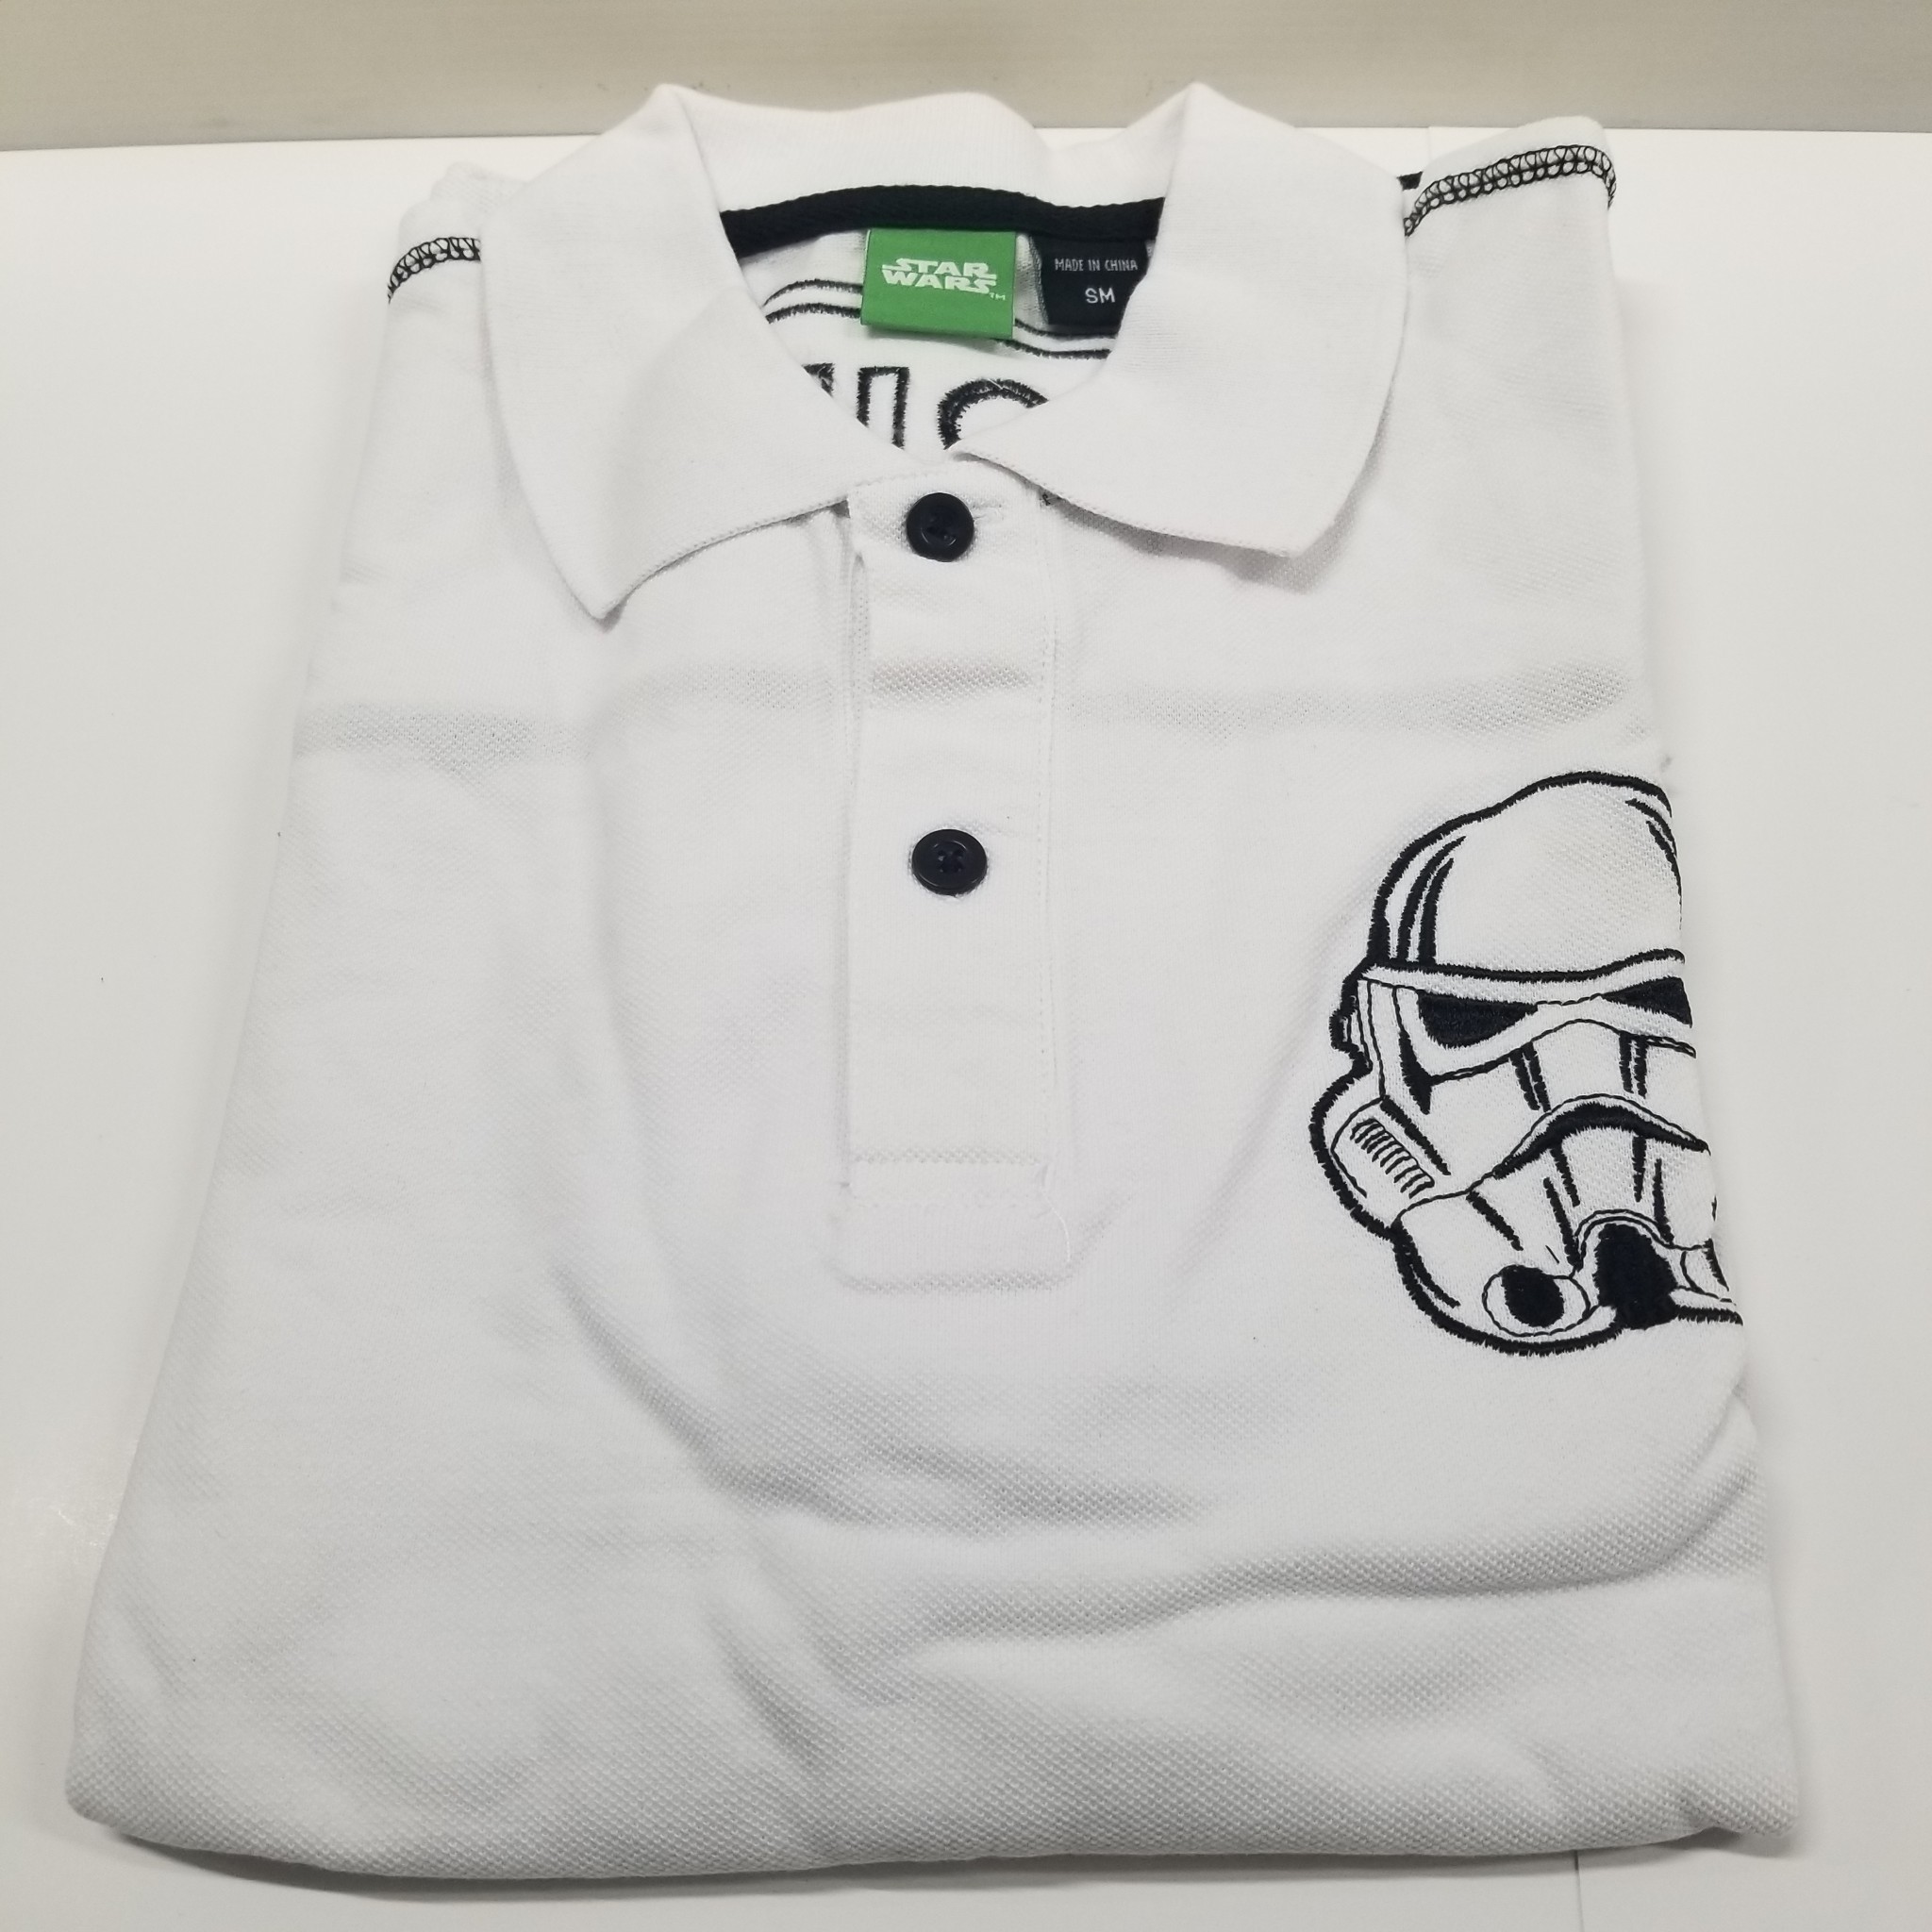 Star Wars - Stormtrooper Polo Shirt S